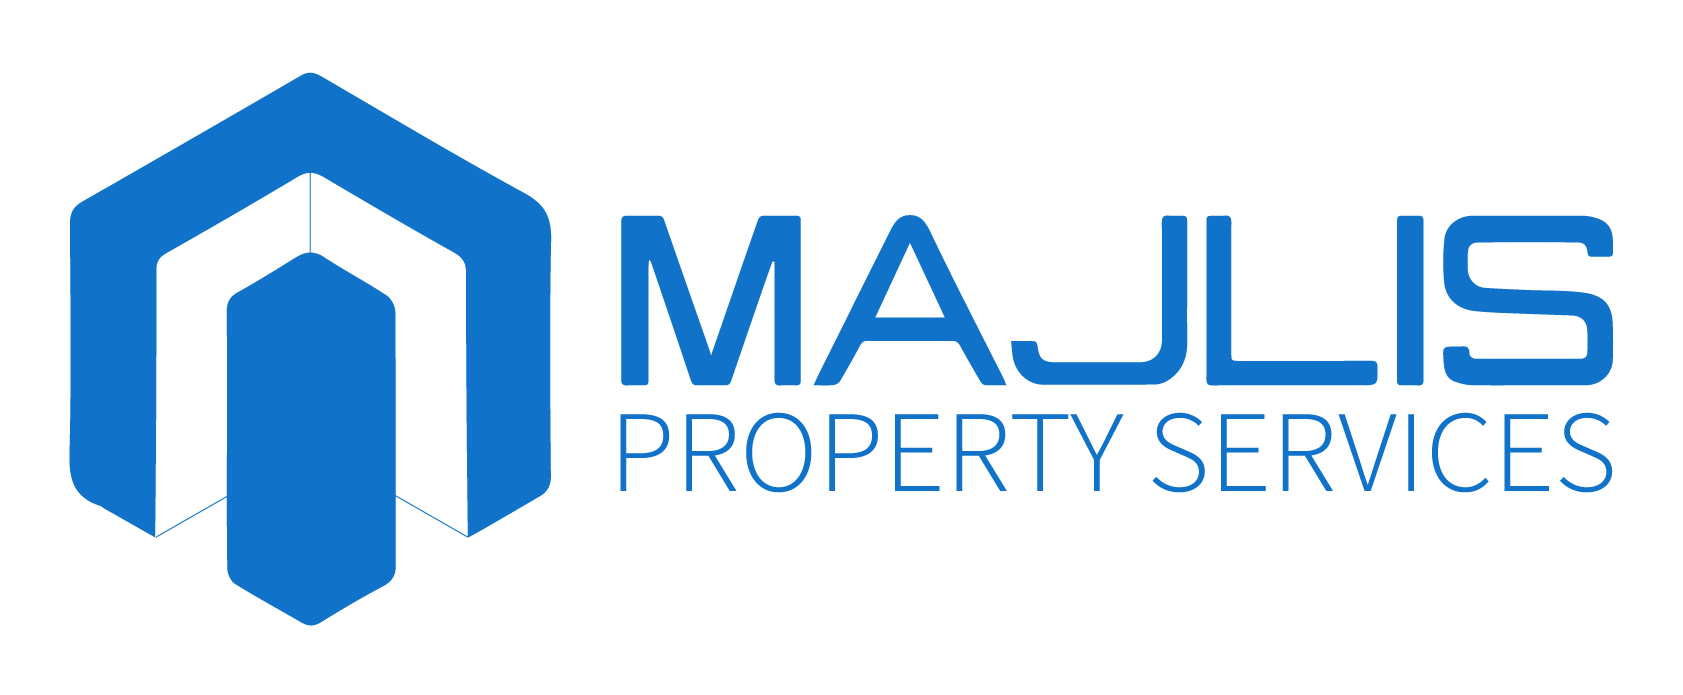 Majlis Property Services